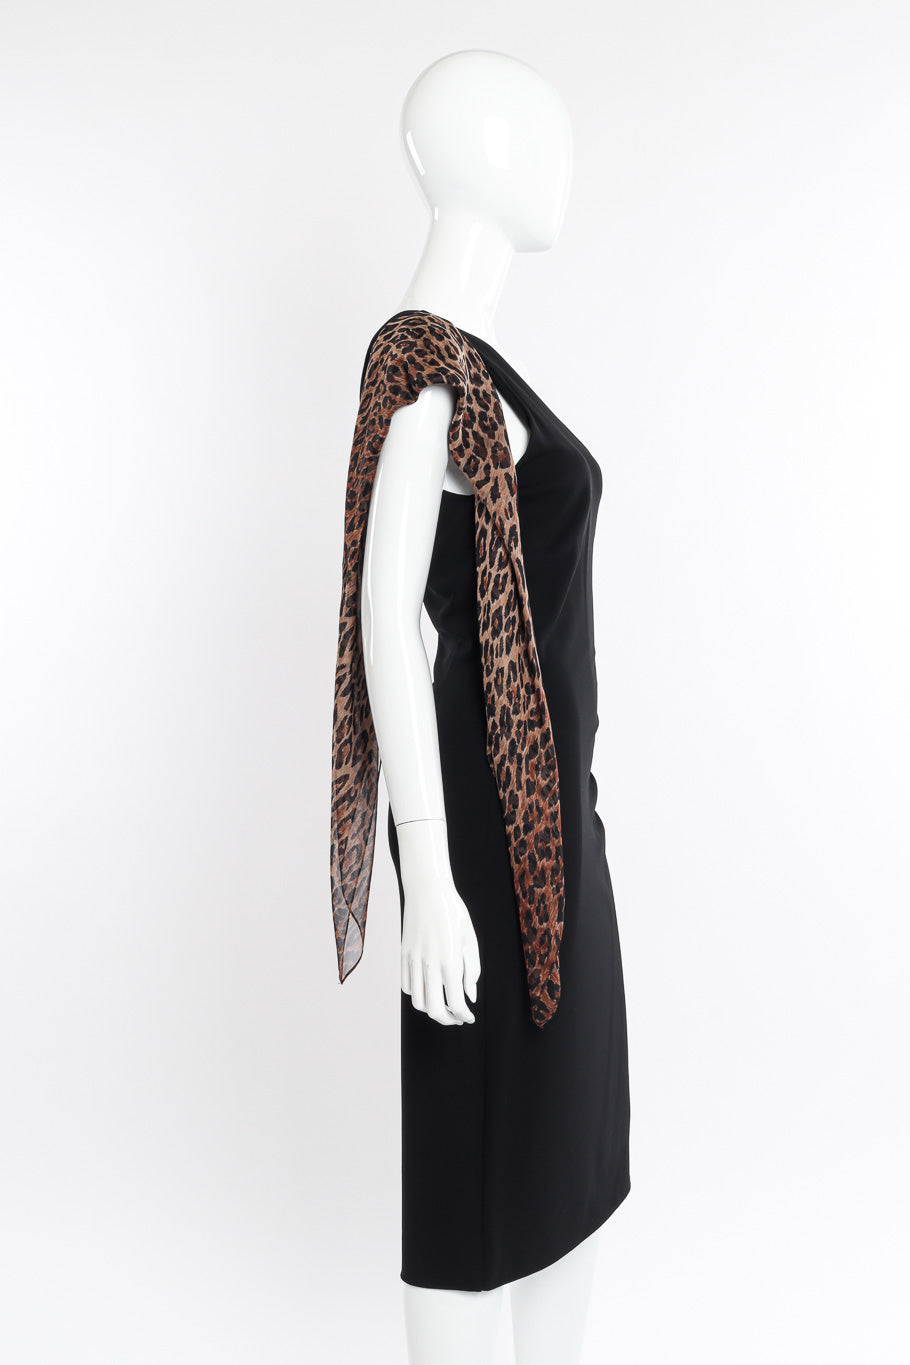 Vintage Dolce & Gabbana One Shoulder Leopard Shawl Dress side view on mannequin with shawl untied @Recessla